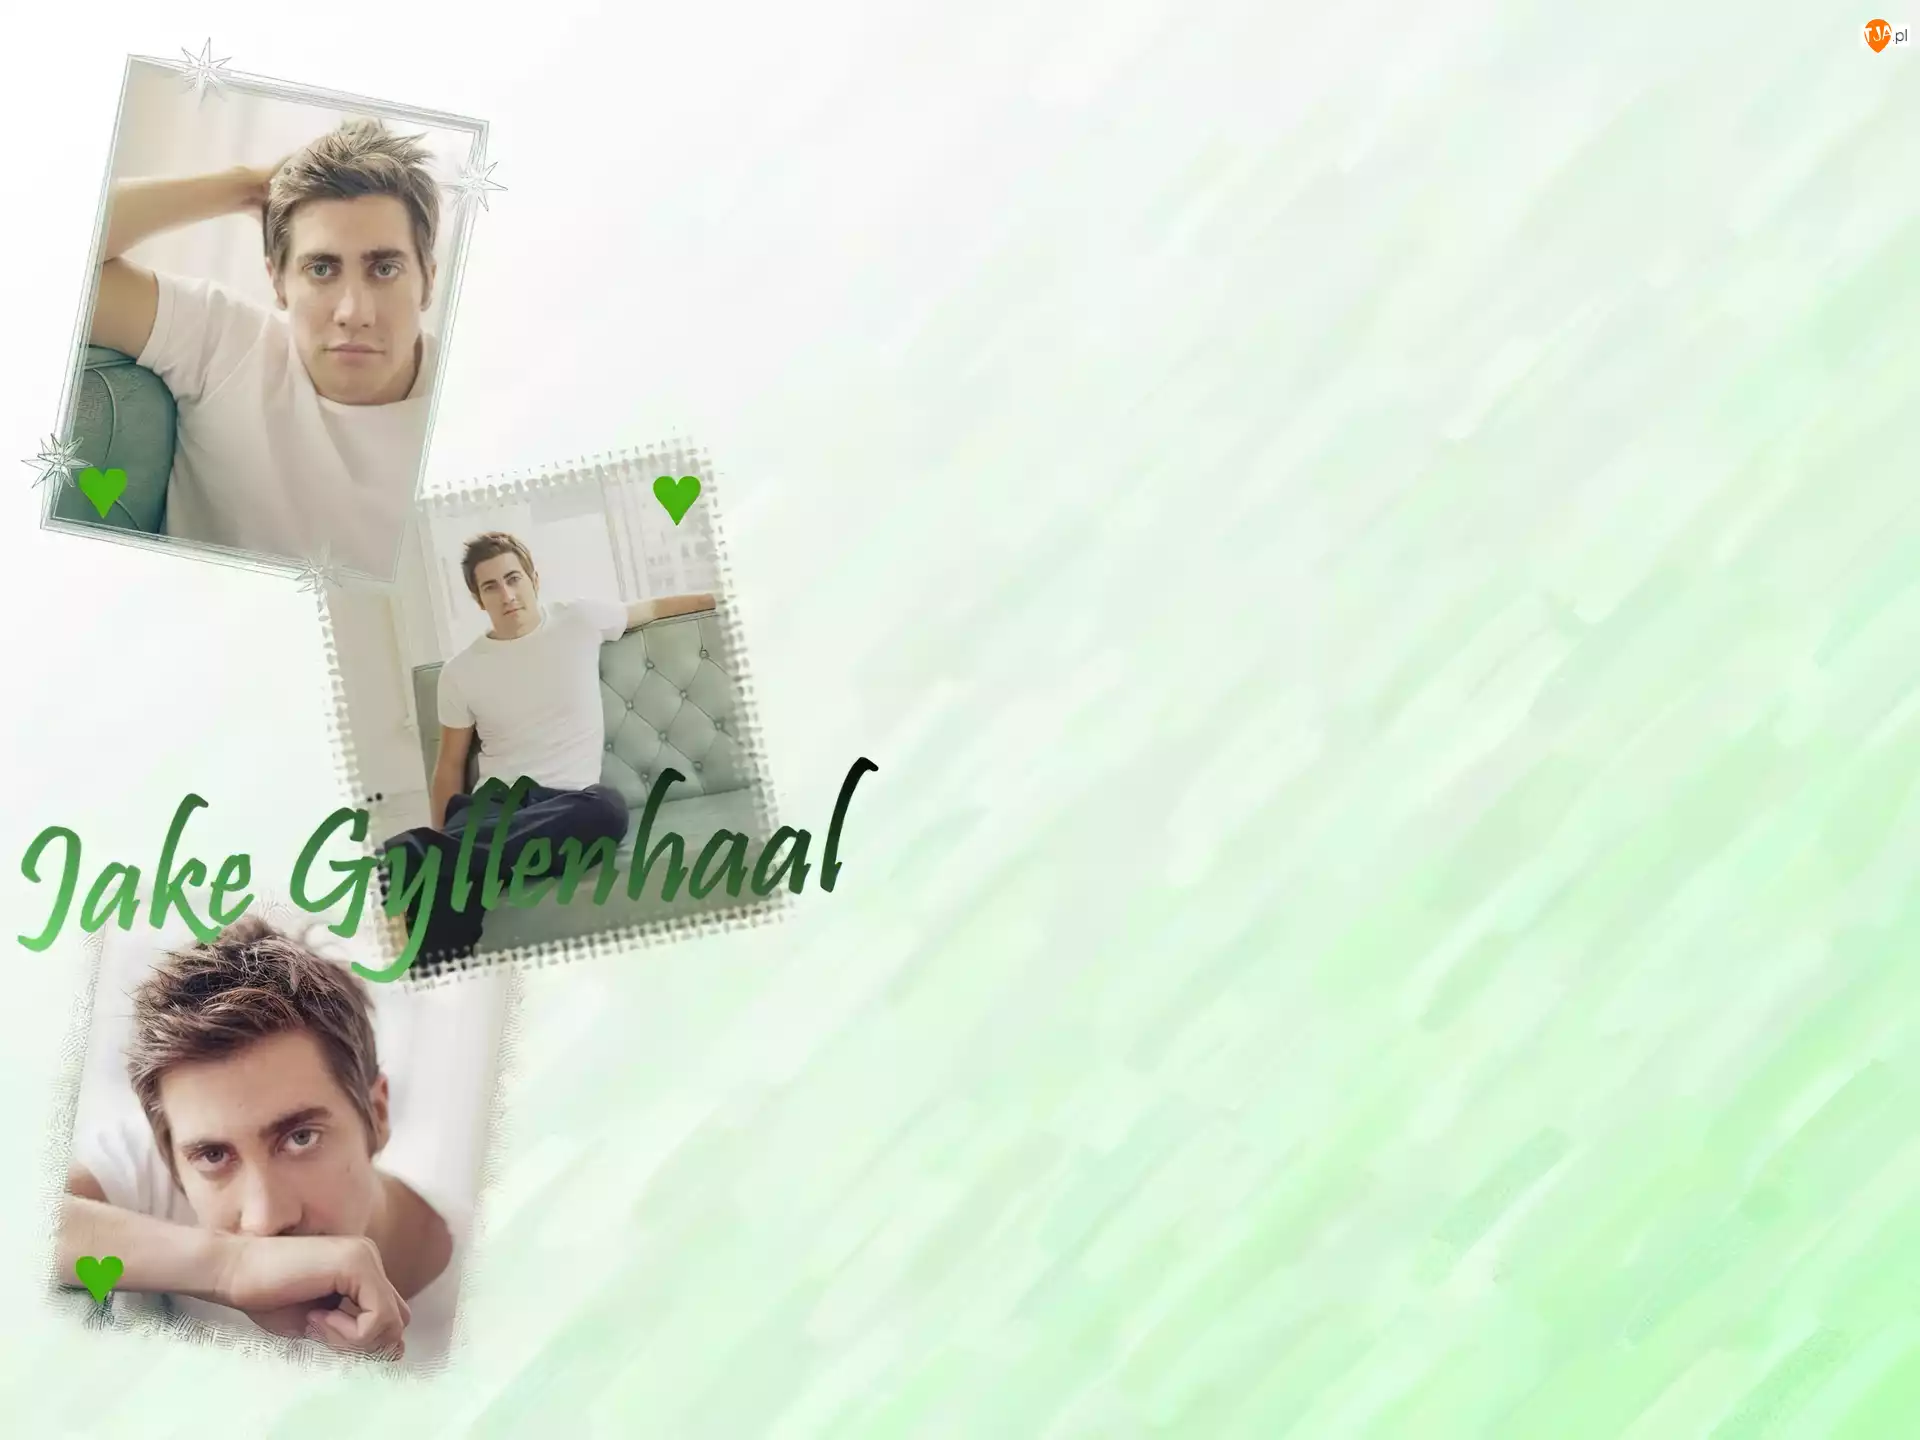 serca, Jake Gyllenhaal, biała koszulka